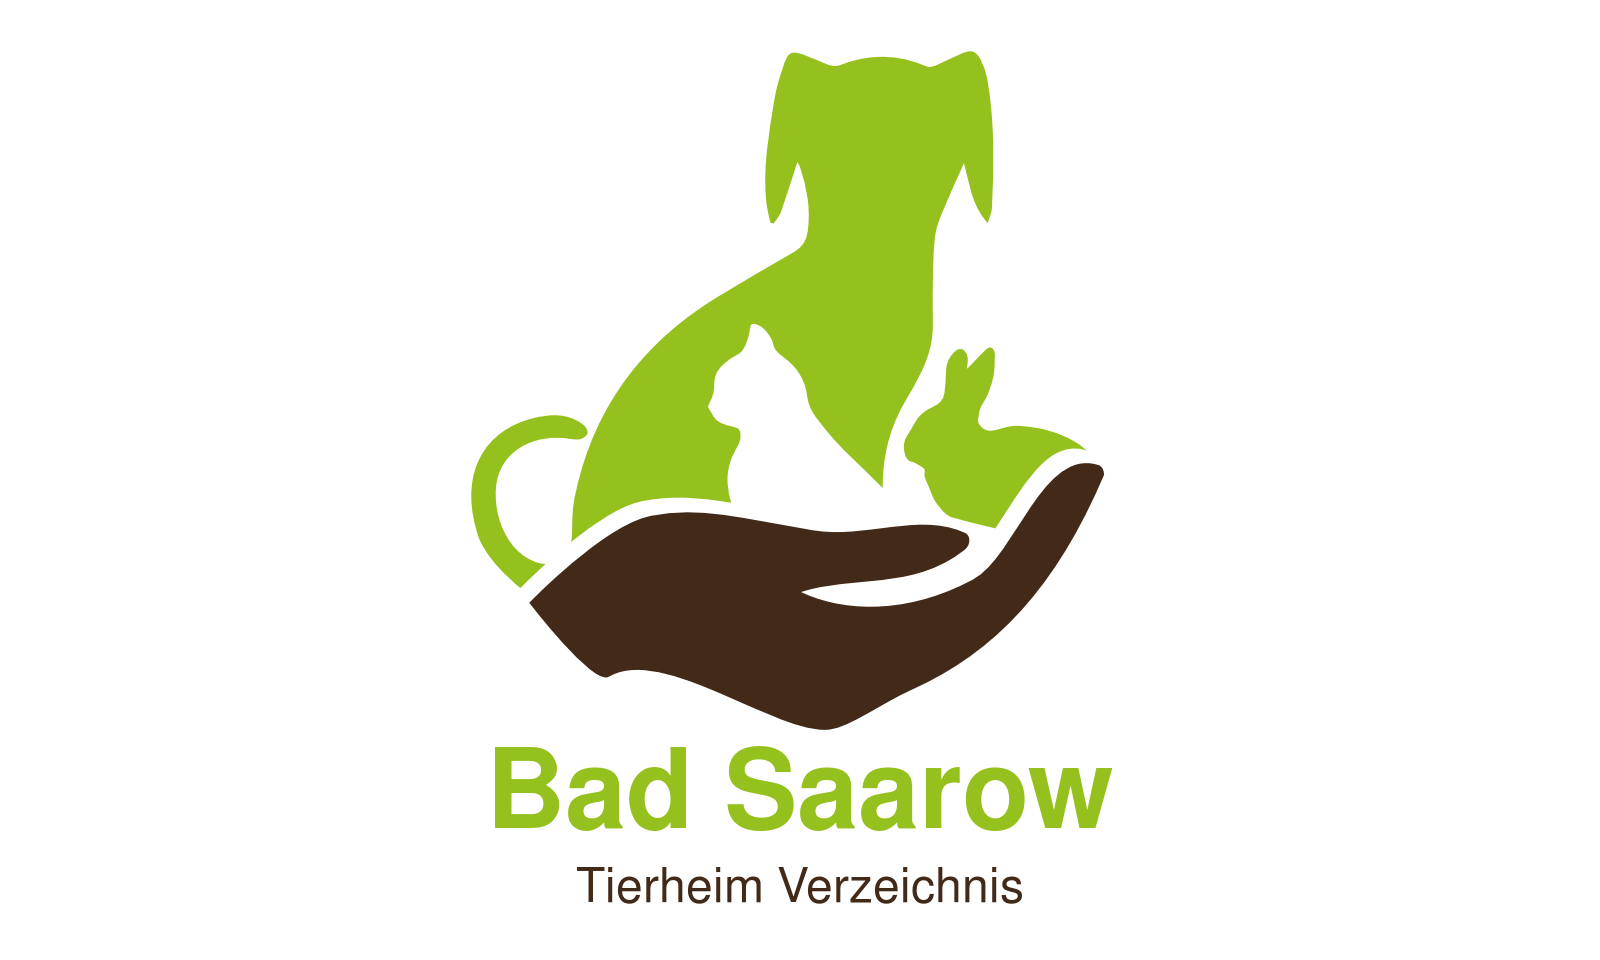 Tierheim Bad Saarow